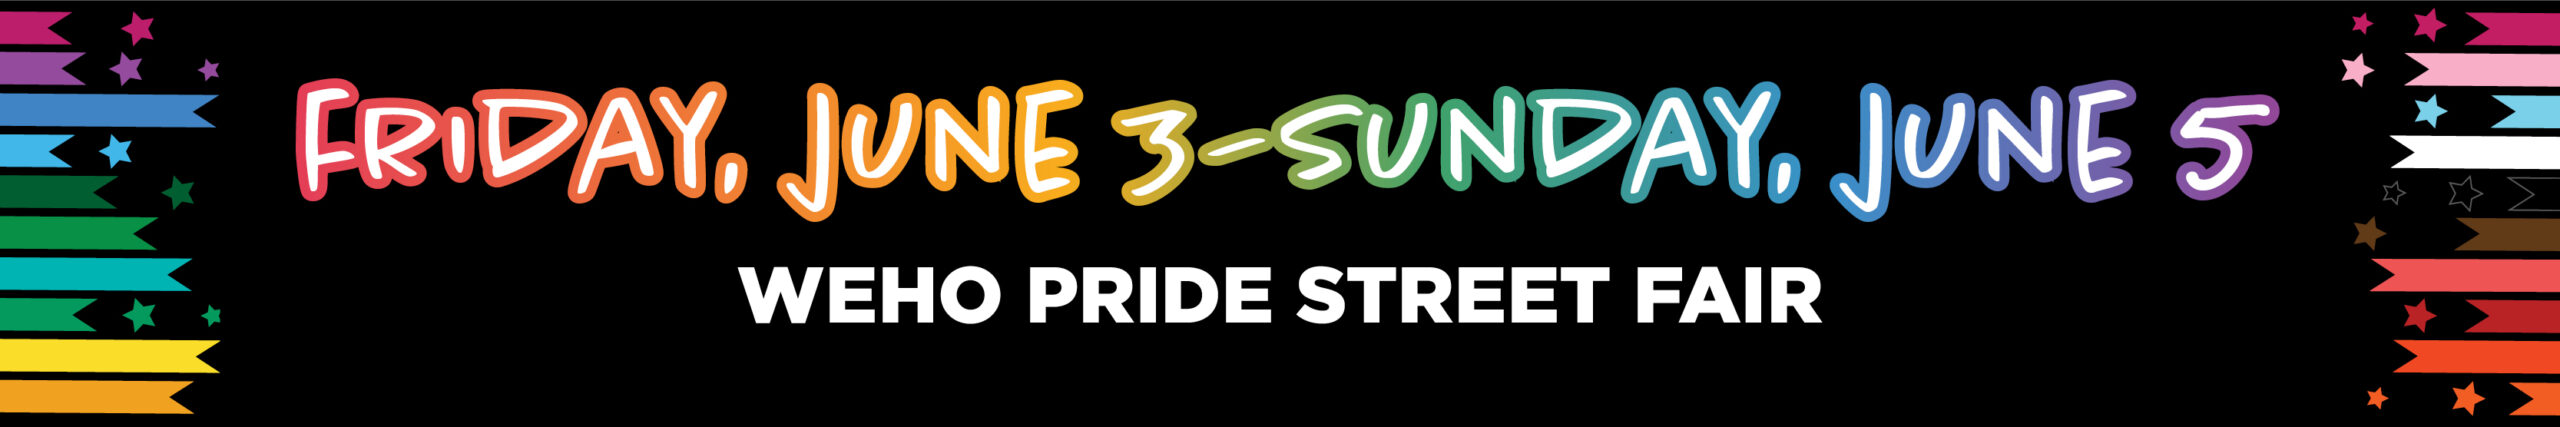 Friday, June 3–Sunday, June 5 WeHo Pride Street Fair